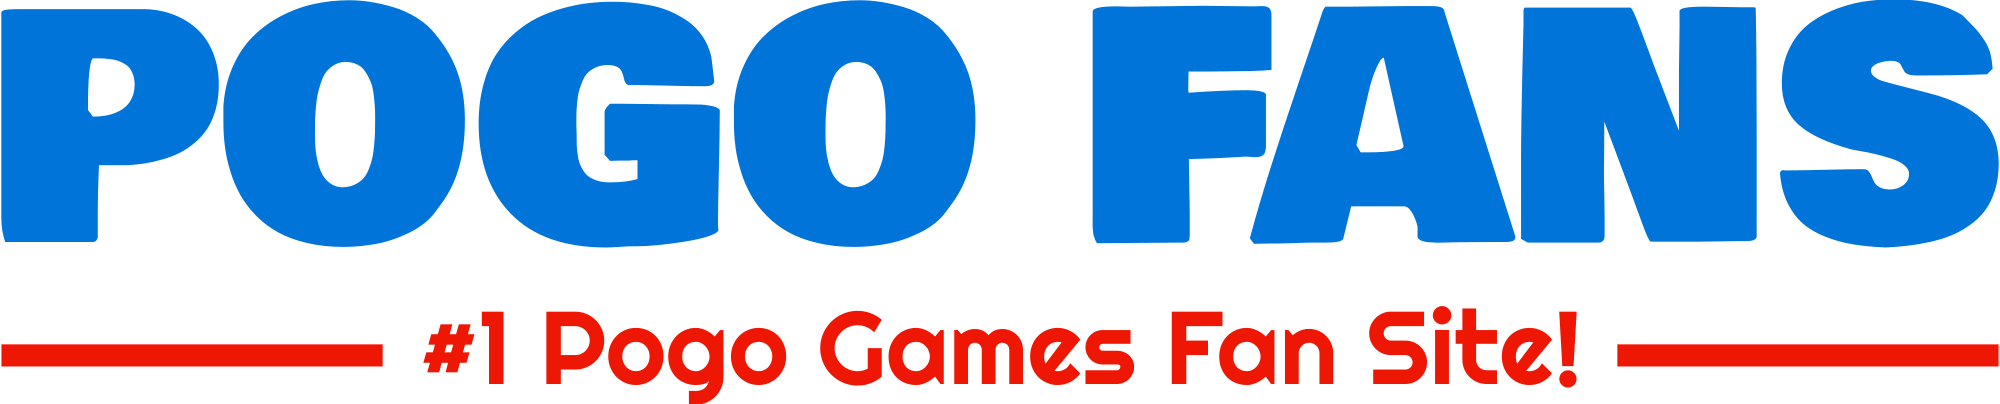 Pogo Fans Logo